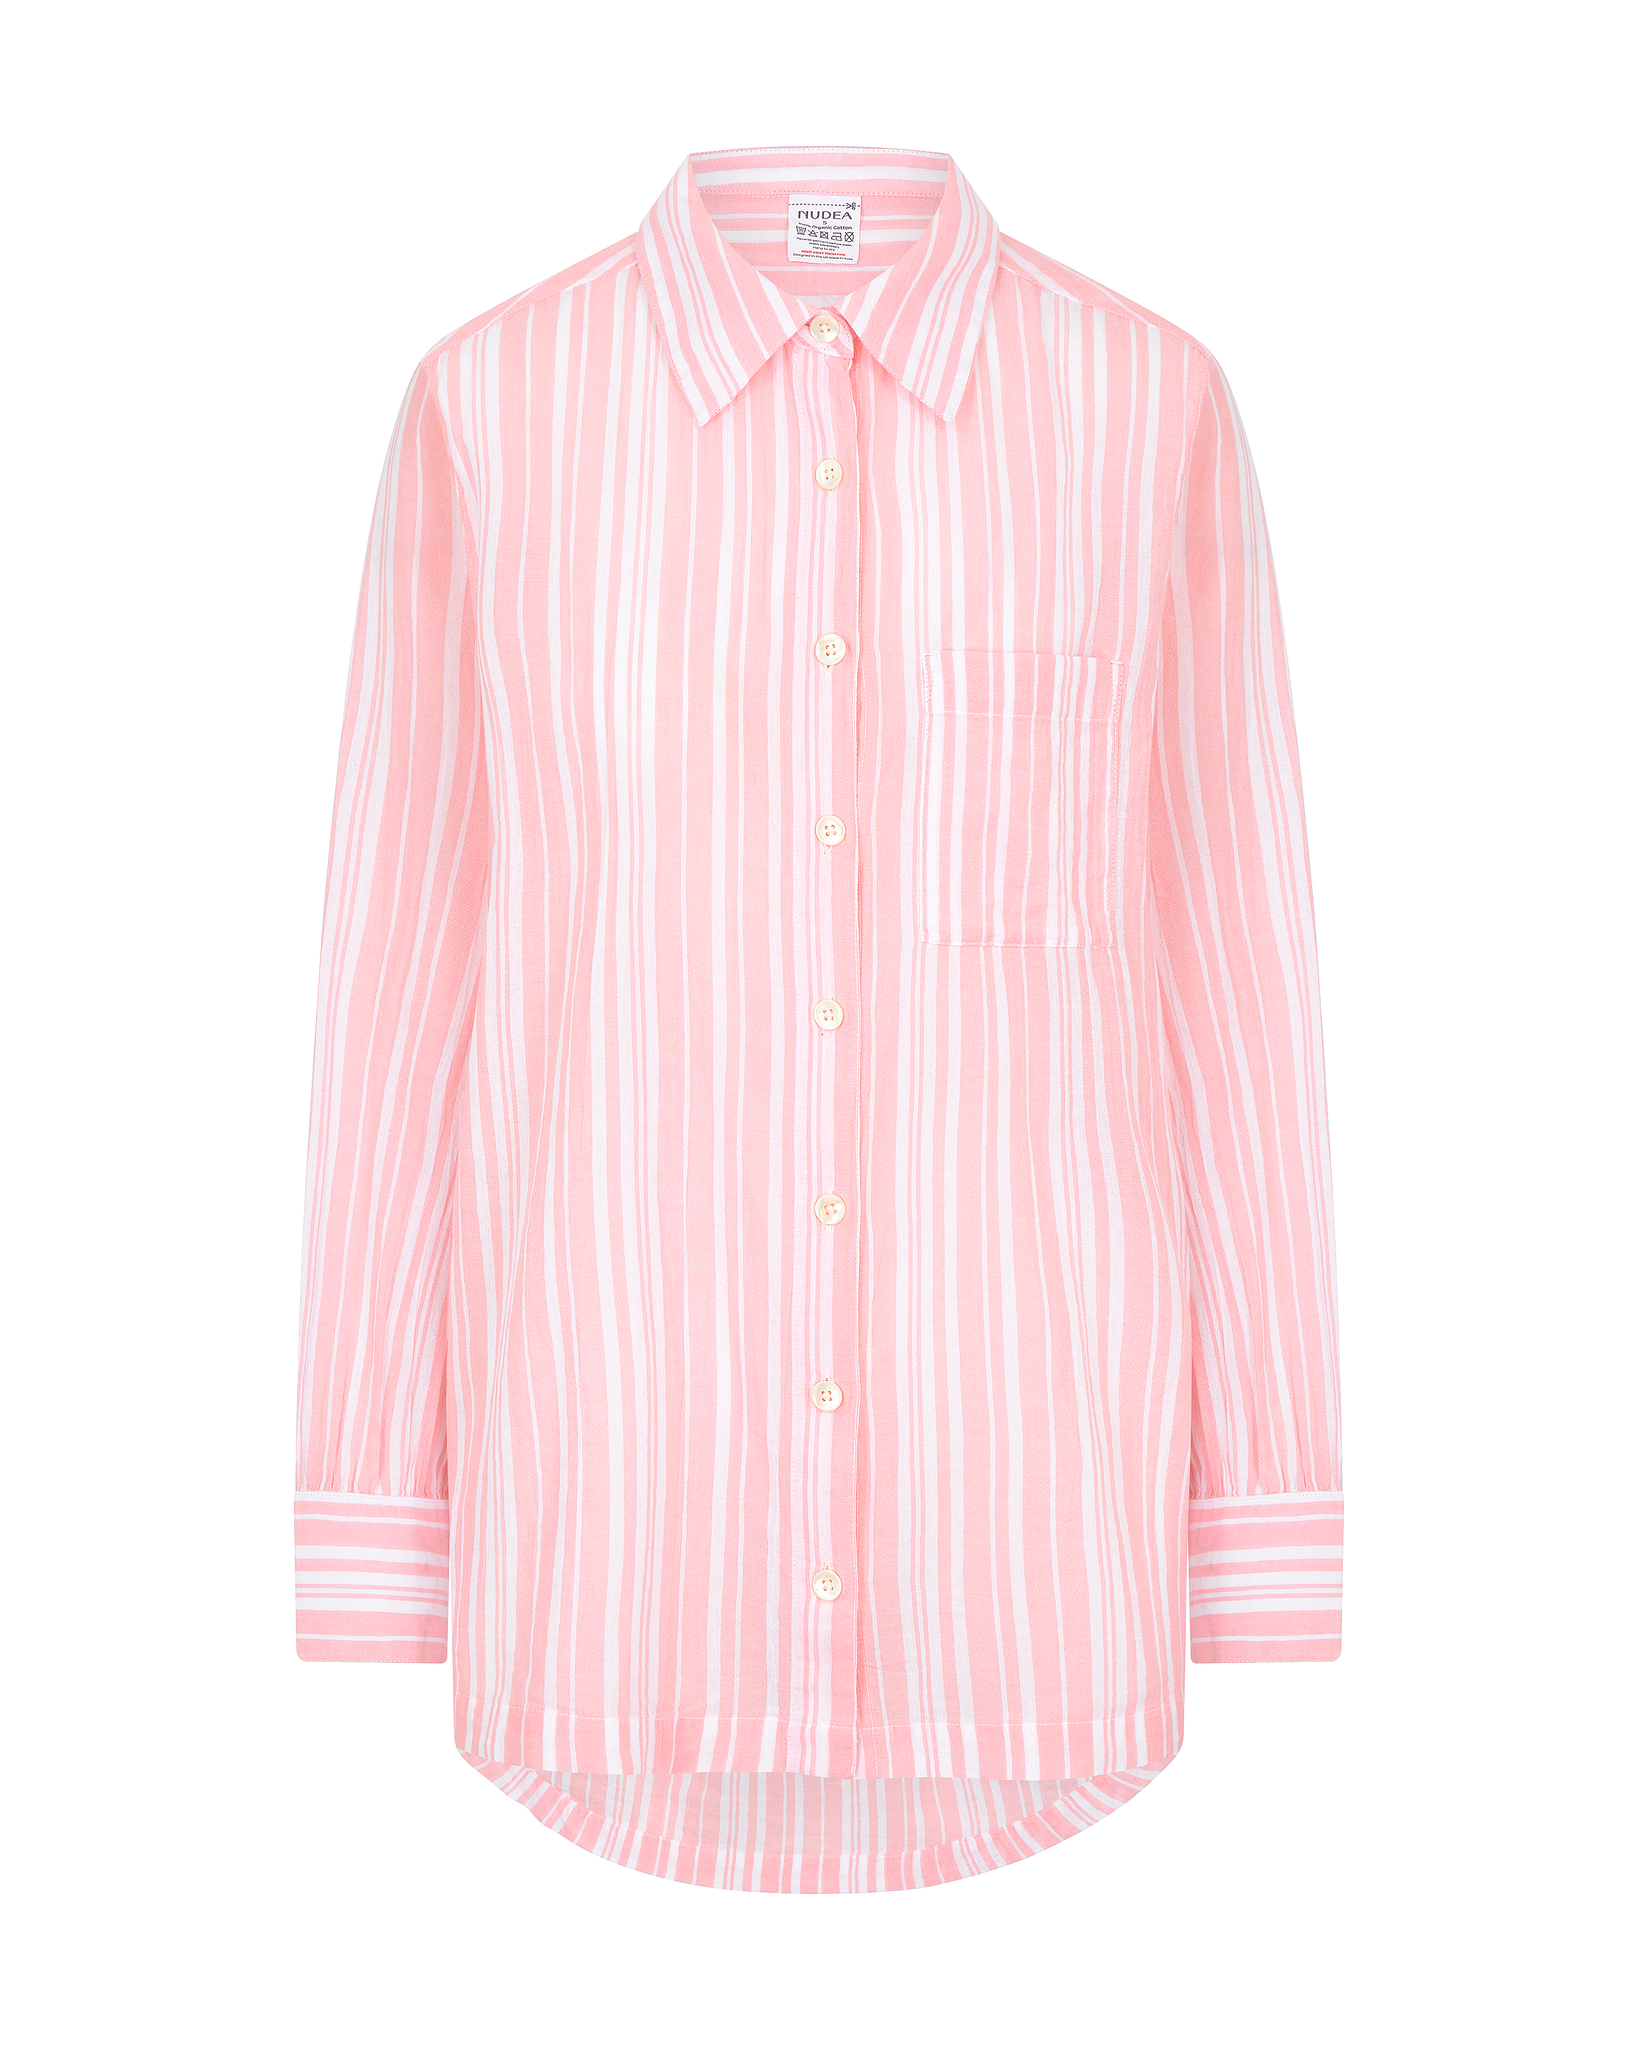 The Midi Shirt - Fondant Pink Stripe